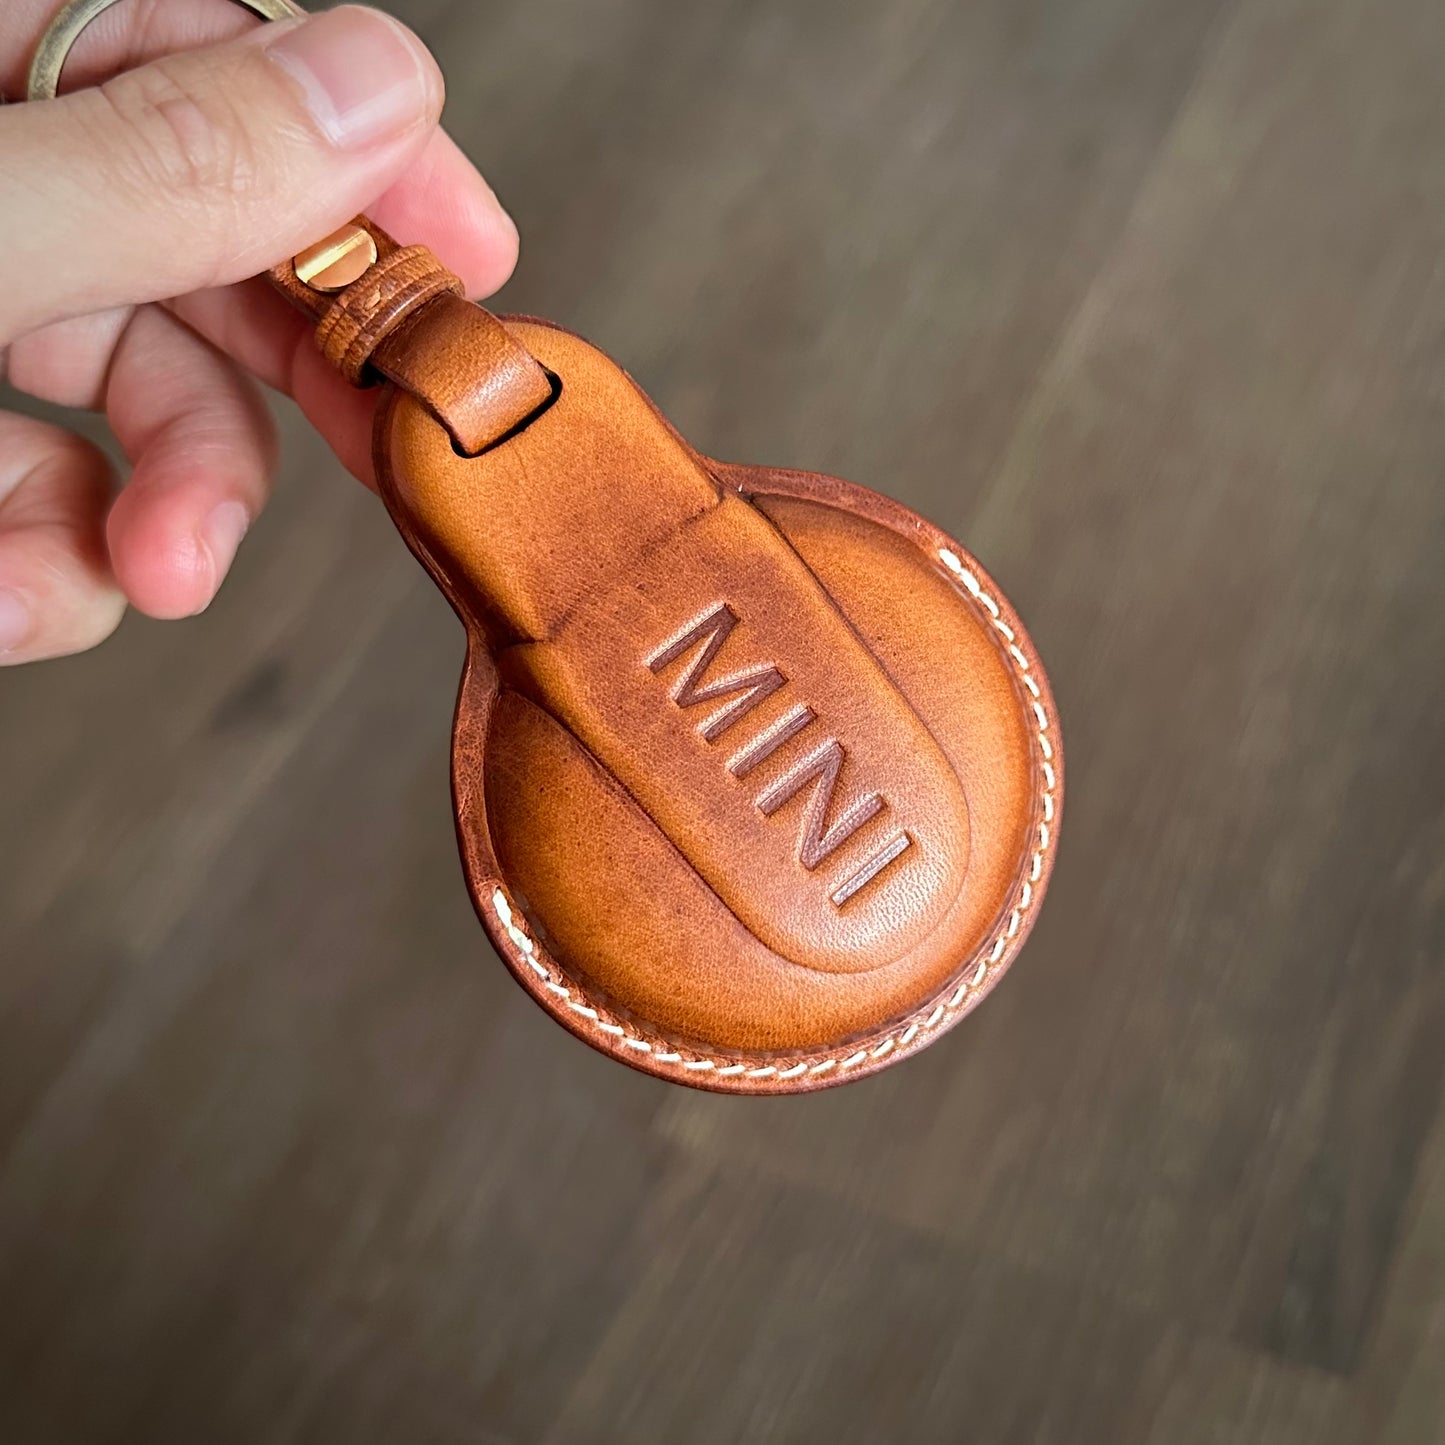 Mini cooper s key fob cover, Wax leather